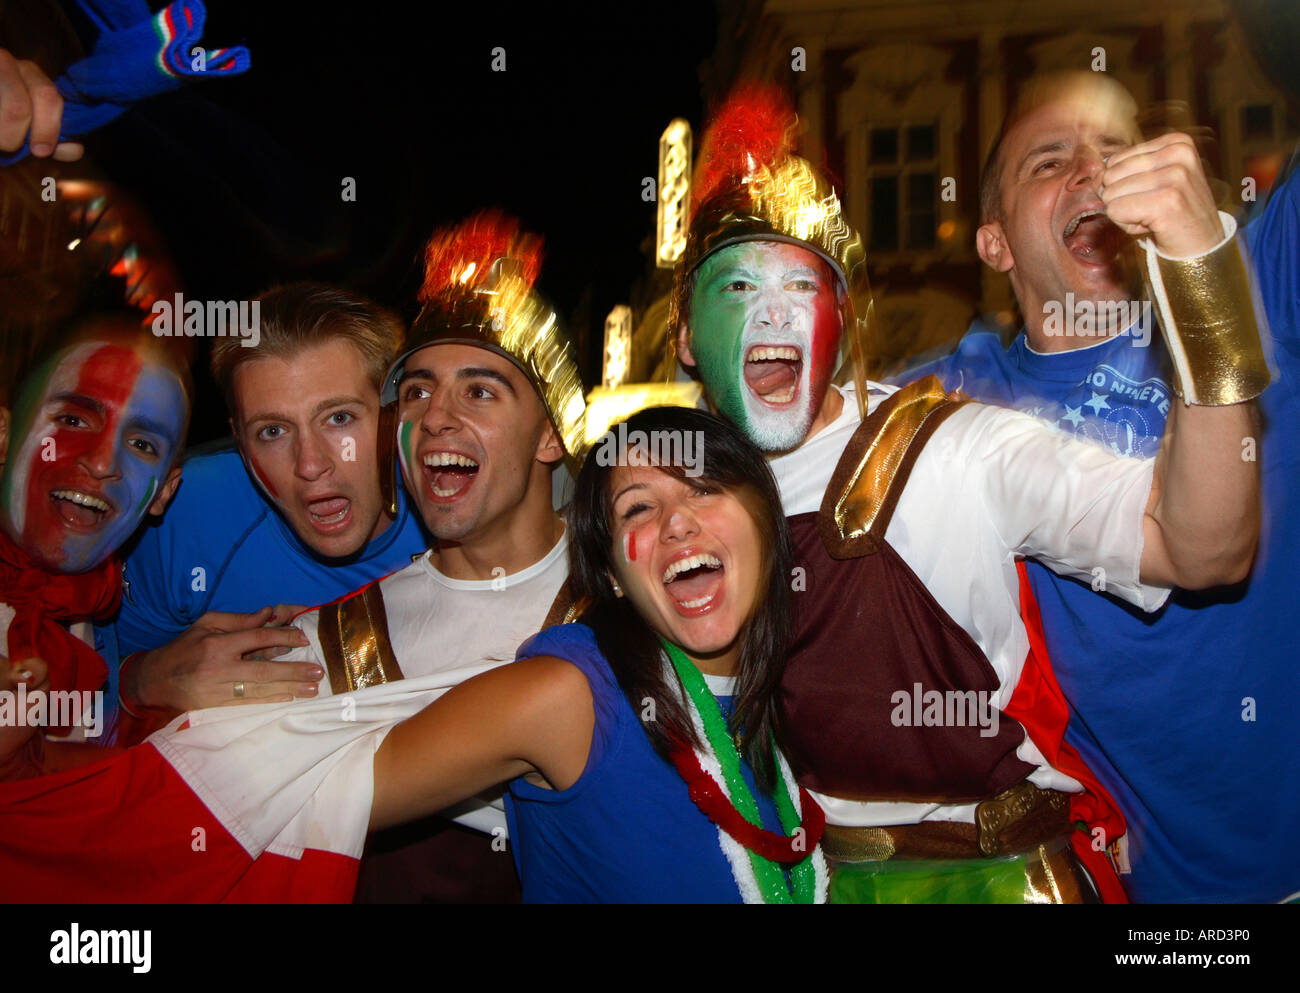 italian-fans-dressed-as-roman-gladiators-celebrating-in-shaftesbury-ARD3P0.jpg